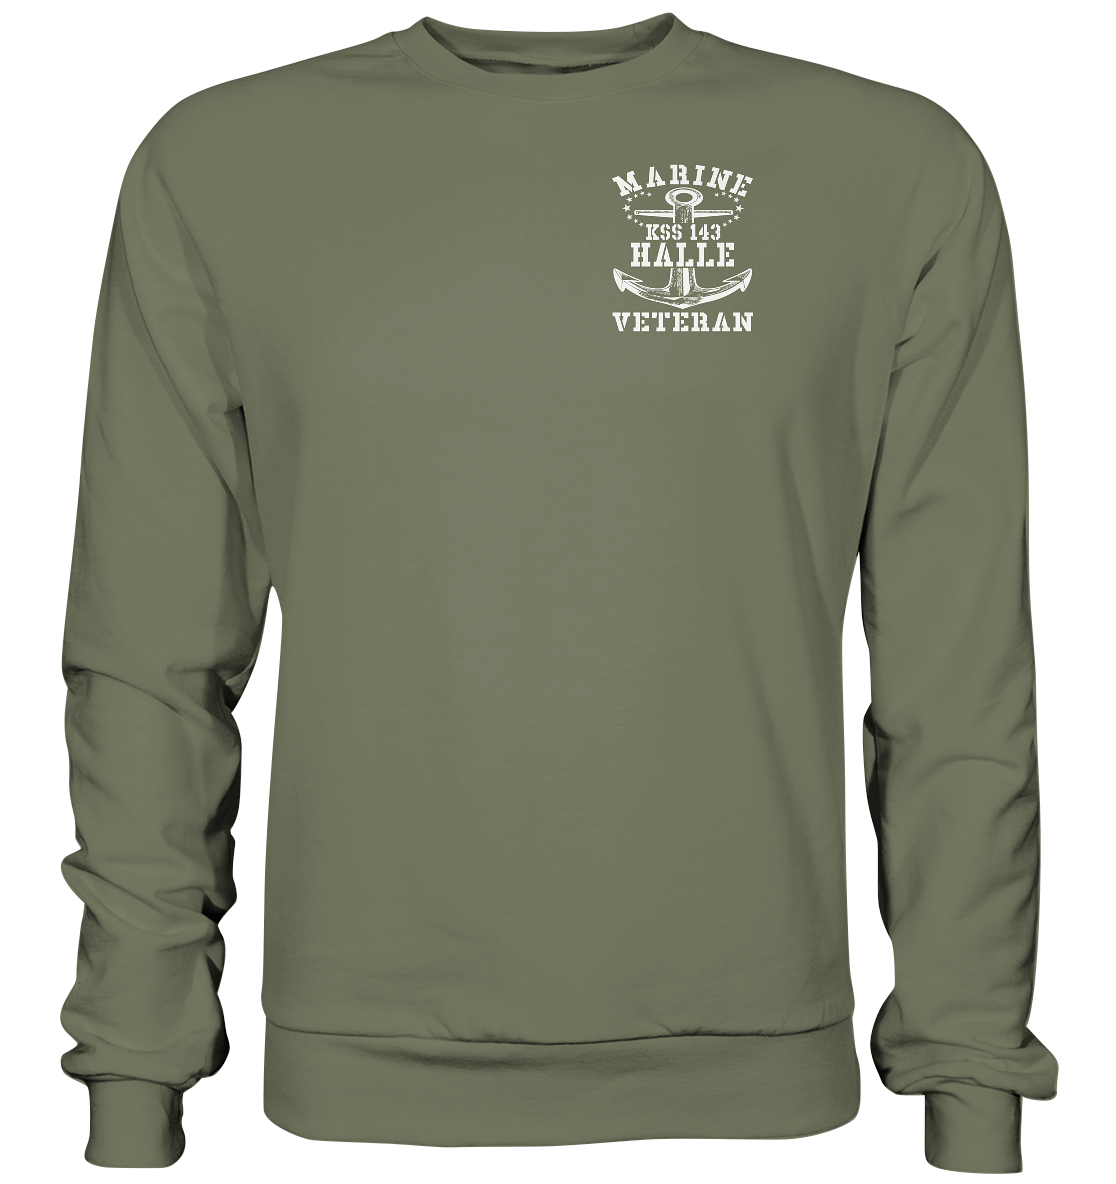 KSS 143 HALLE Marine Veteran Brustlogo - Premium Sweatshirt